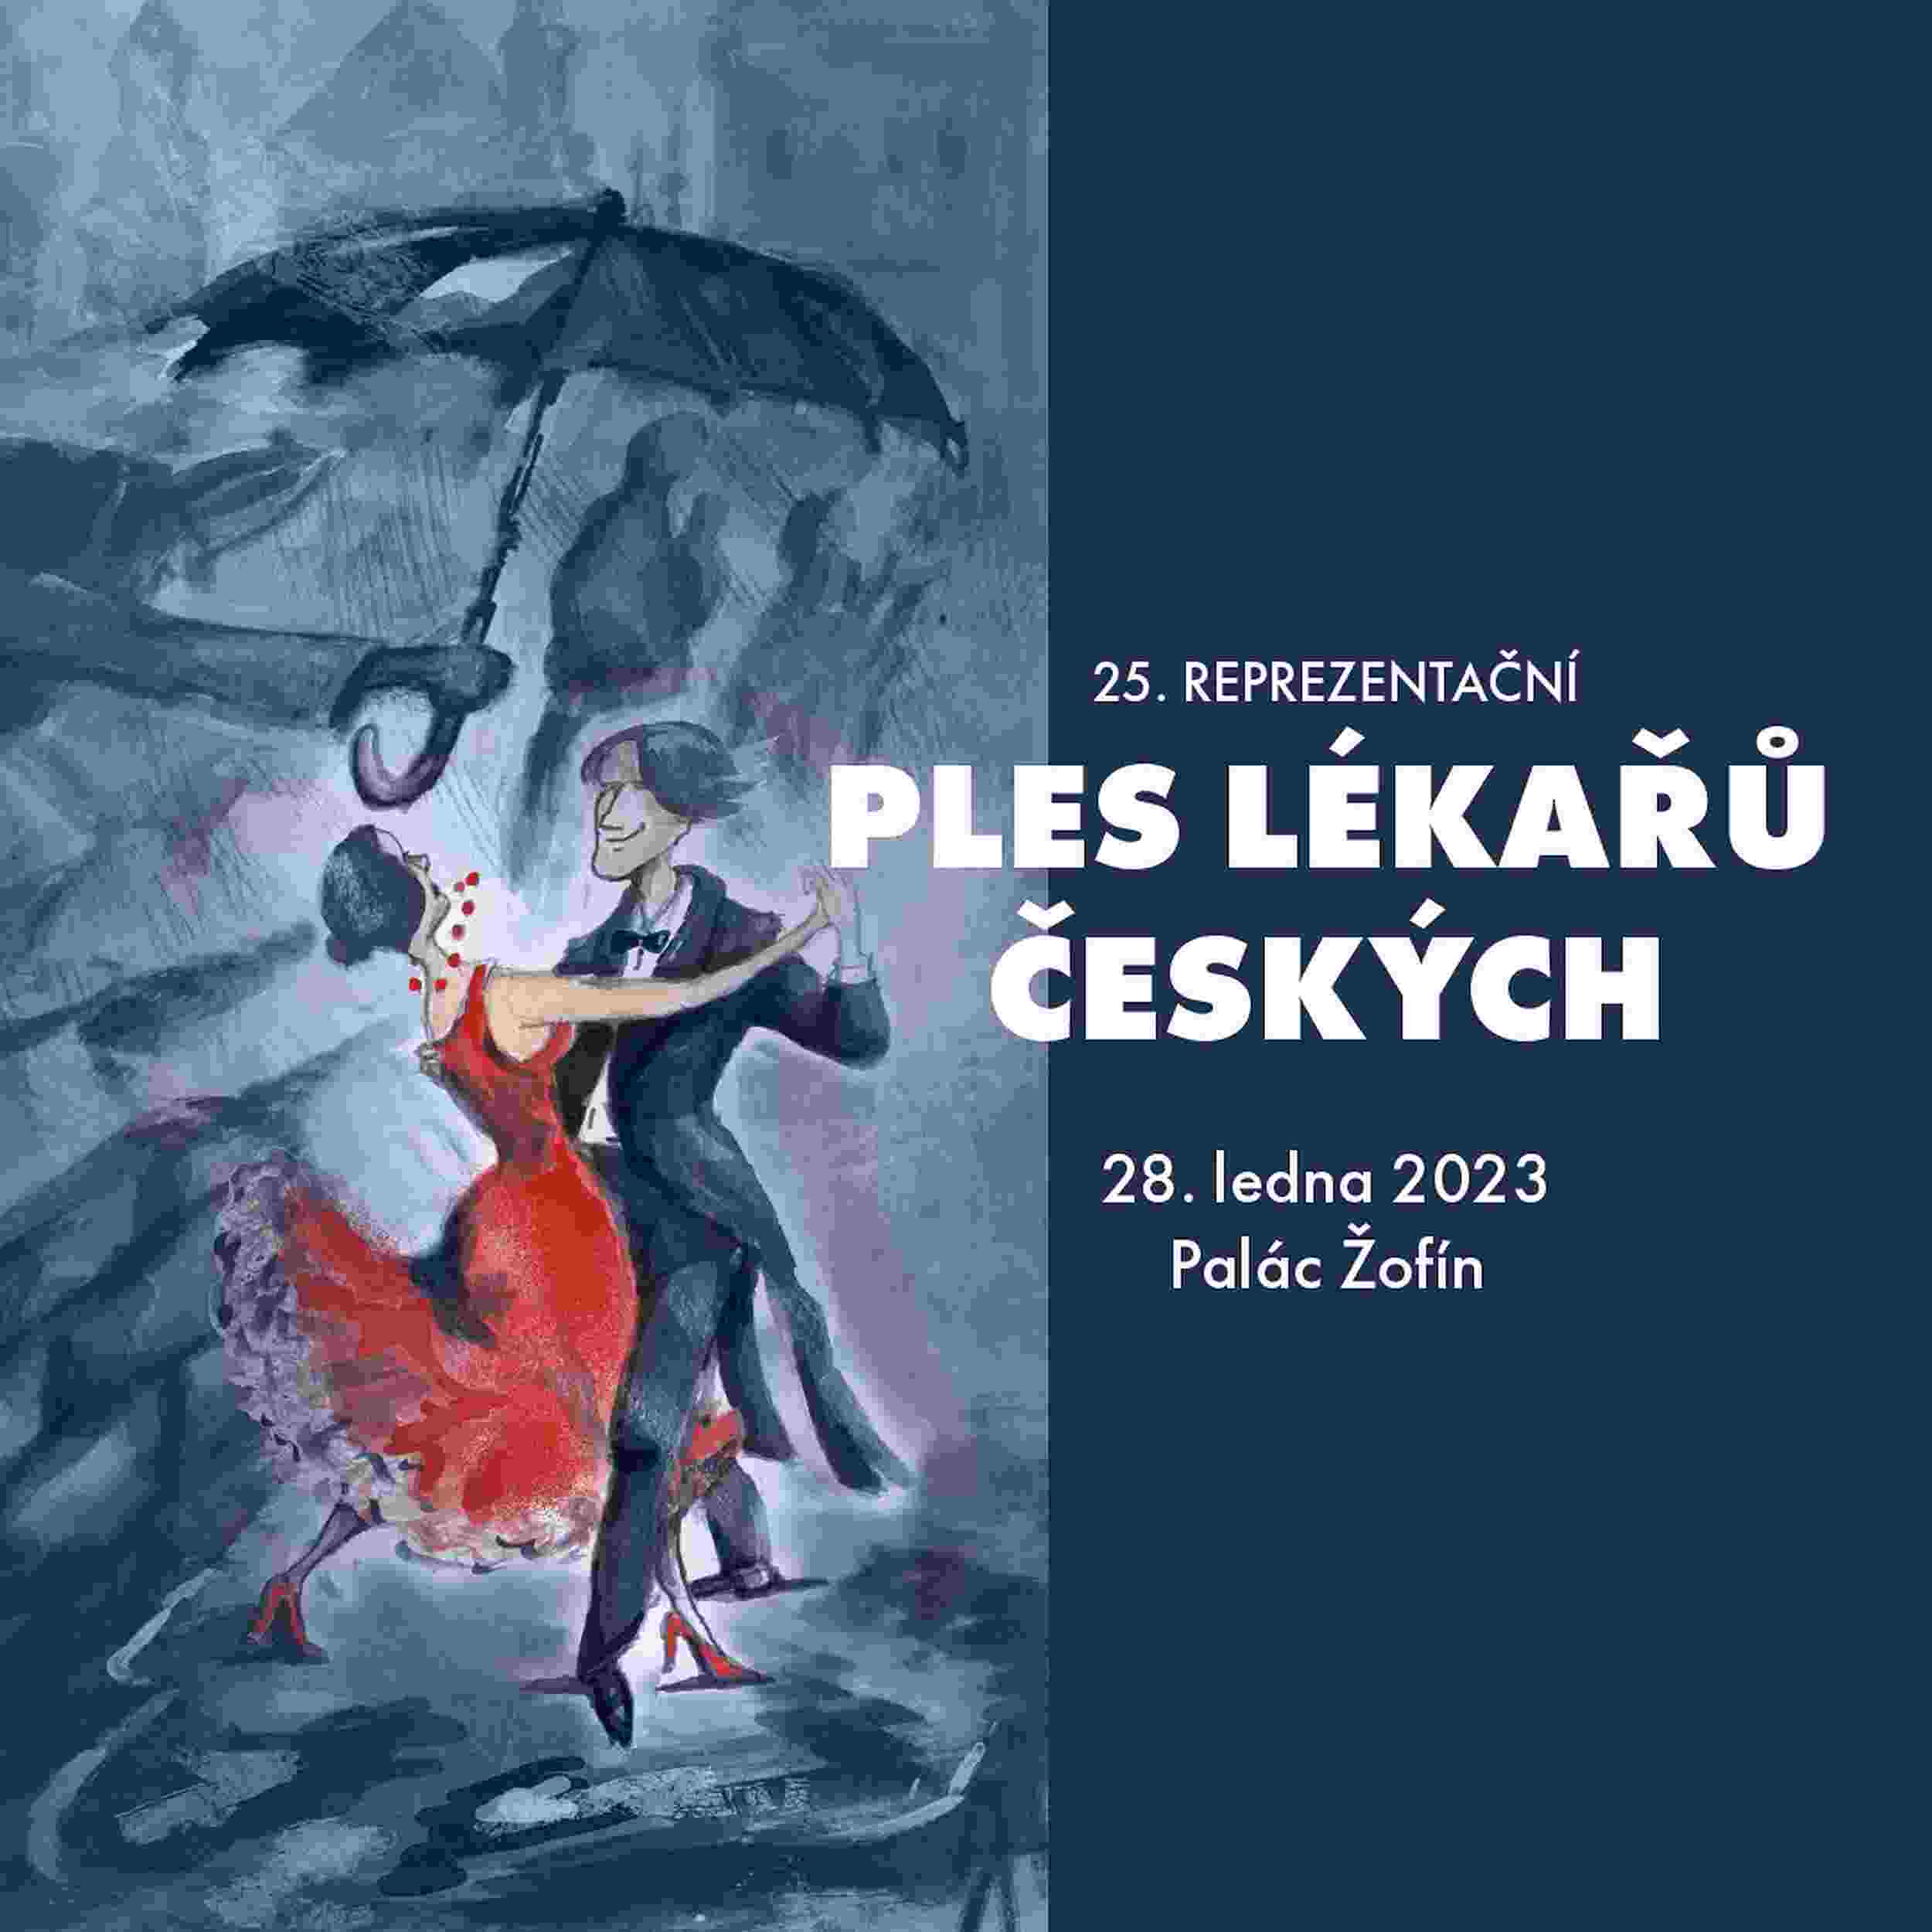 25. Reprezentační ples lékařů českých- Praha -Palác Žofín Praha 1 Slovanský ostrov 226, Praha 1 11000